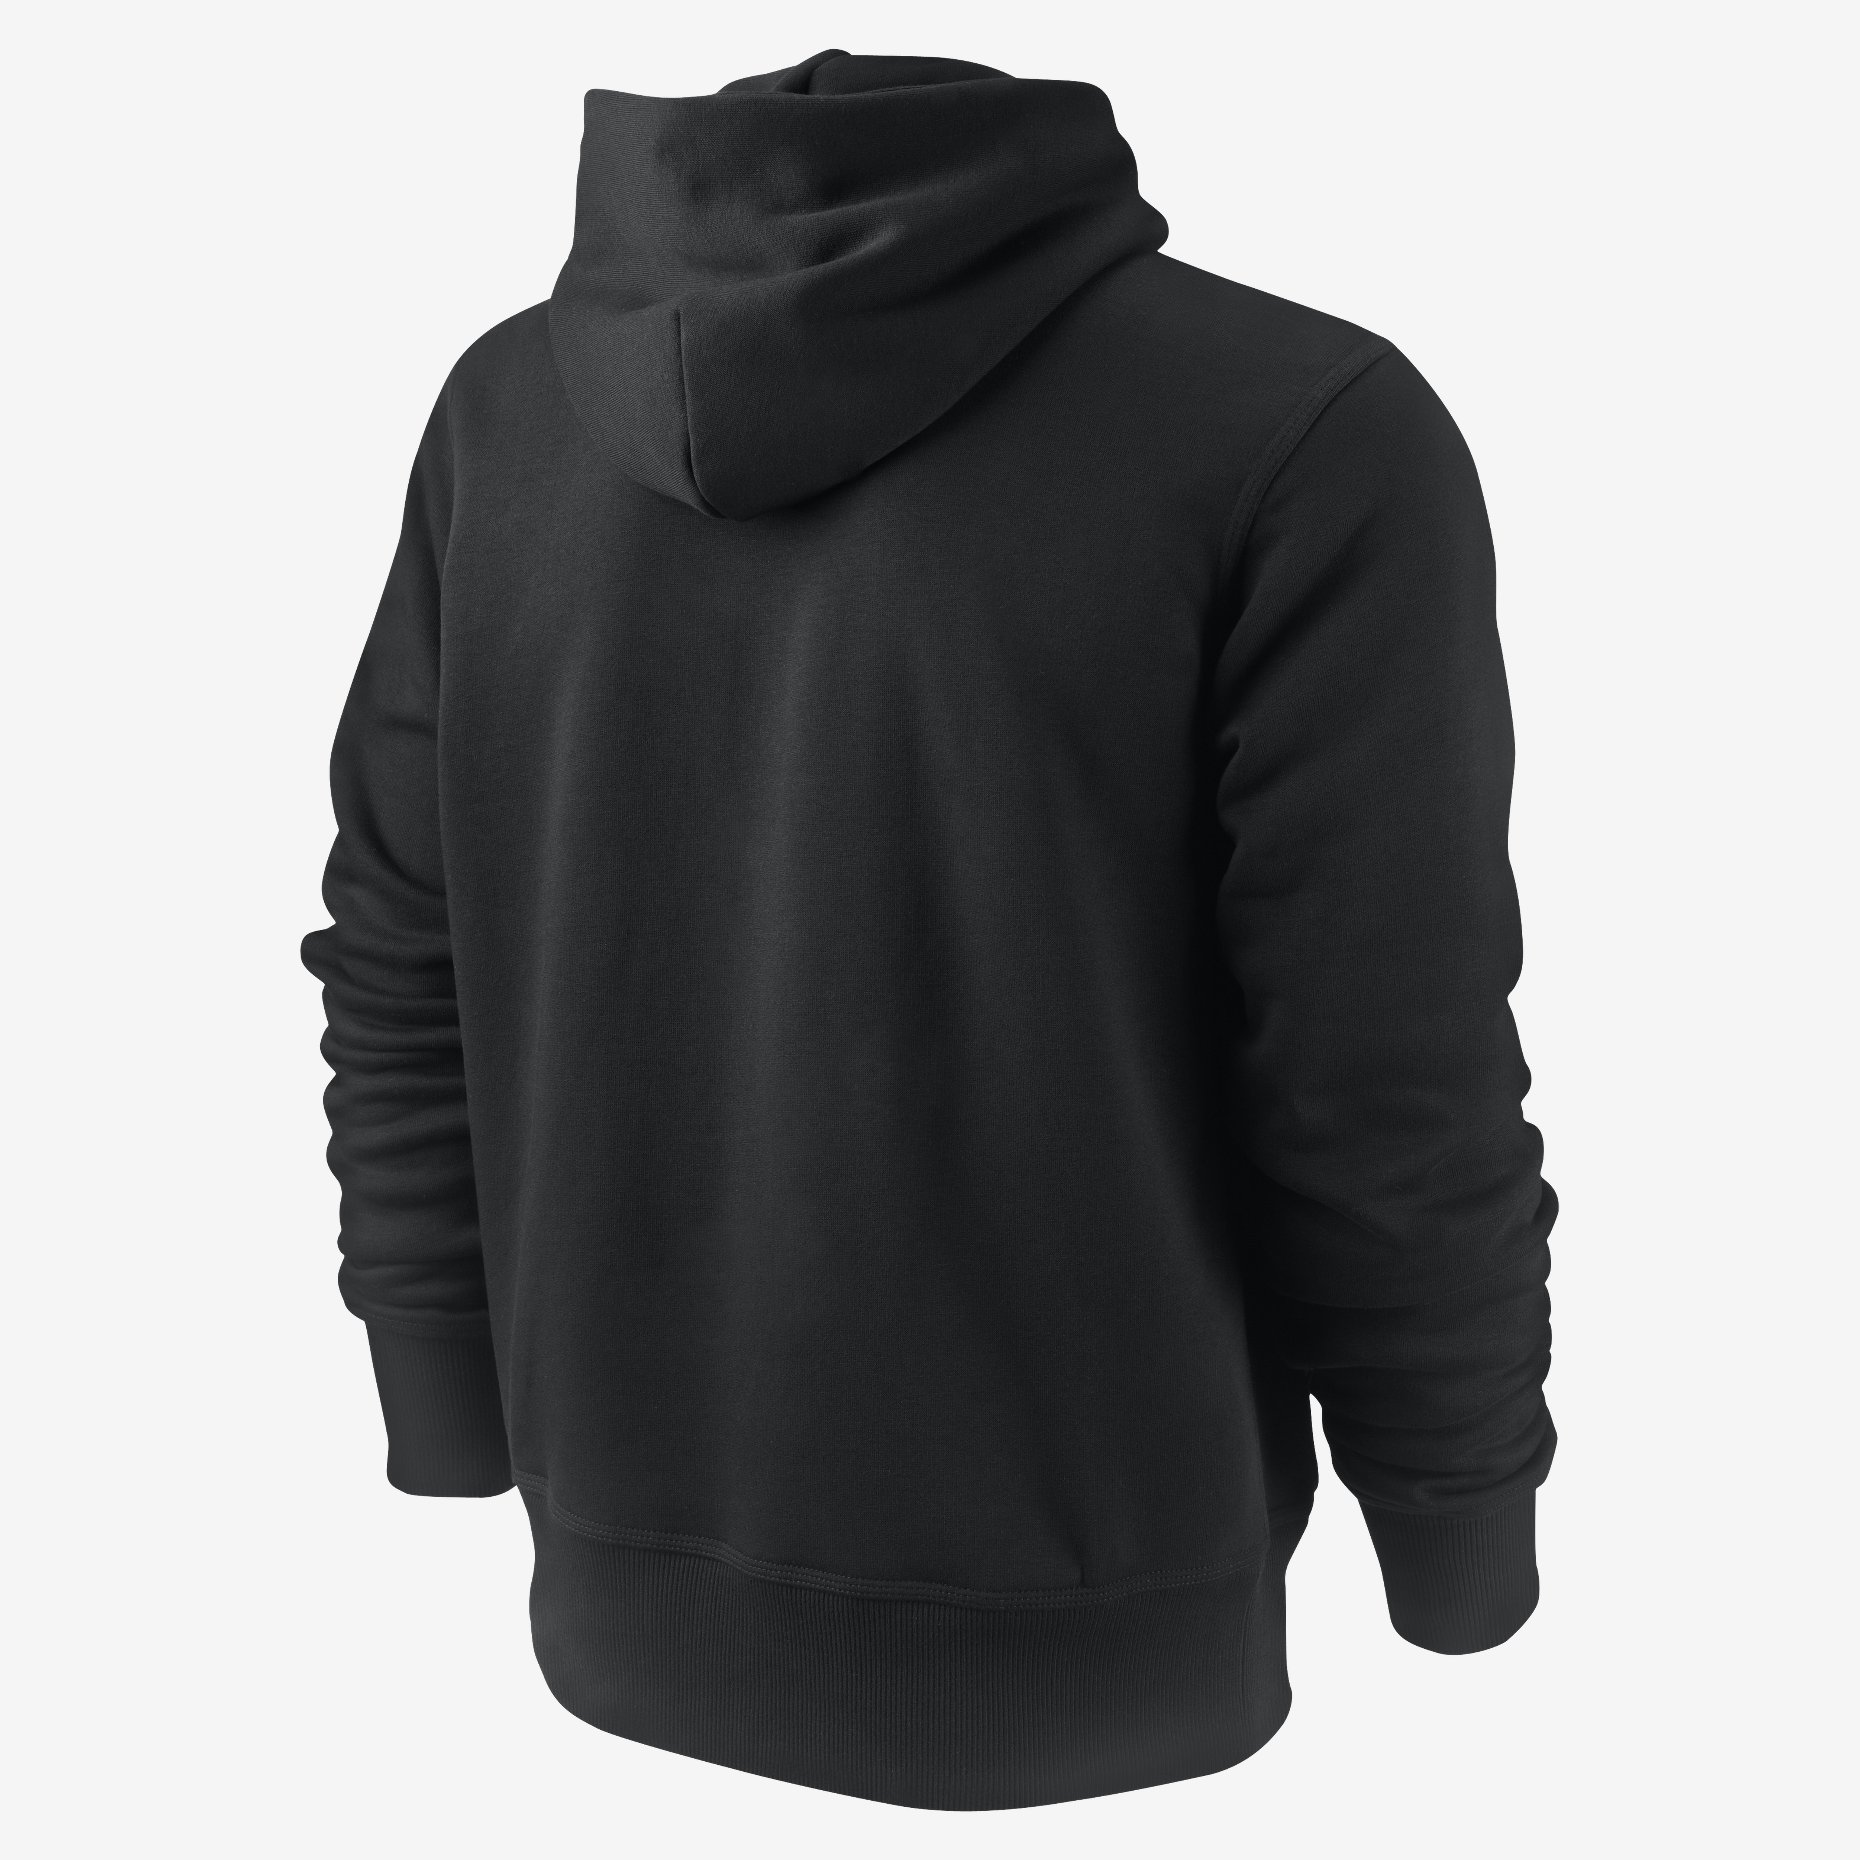 New Nike Mens Full Zip Hooded Sweat Top Jacket Fleece Sweatshirt Black ...